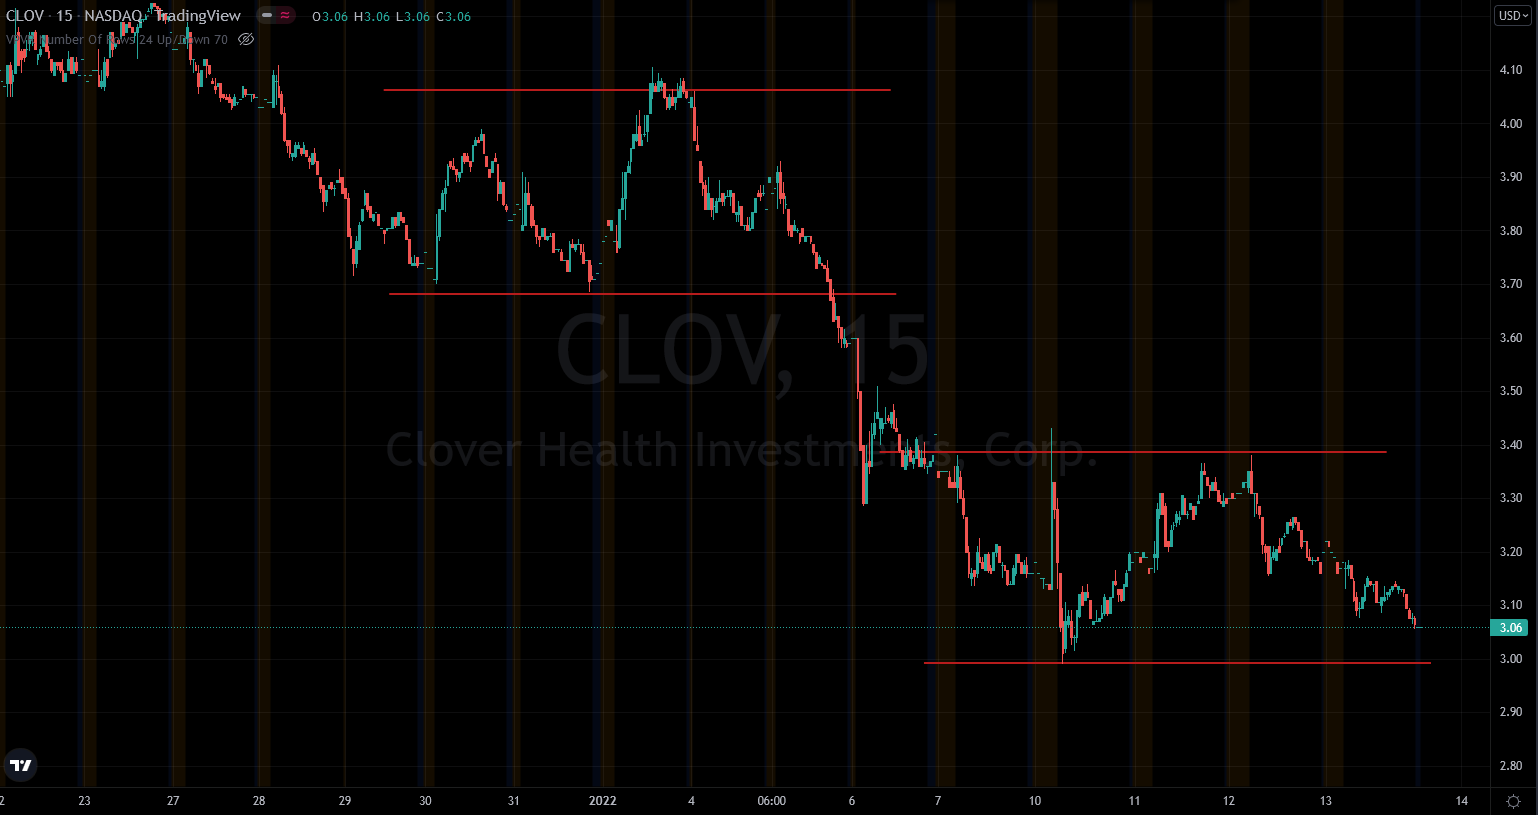 Clover Health (CLOV) Stock Chart Showing Persistent Descending Channel